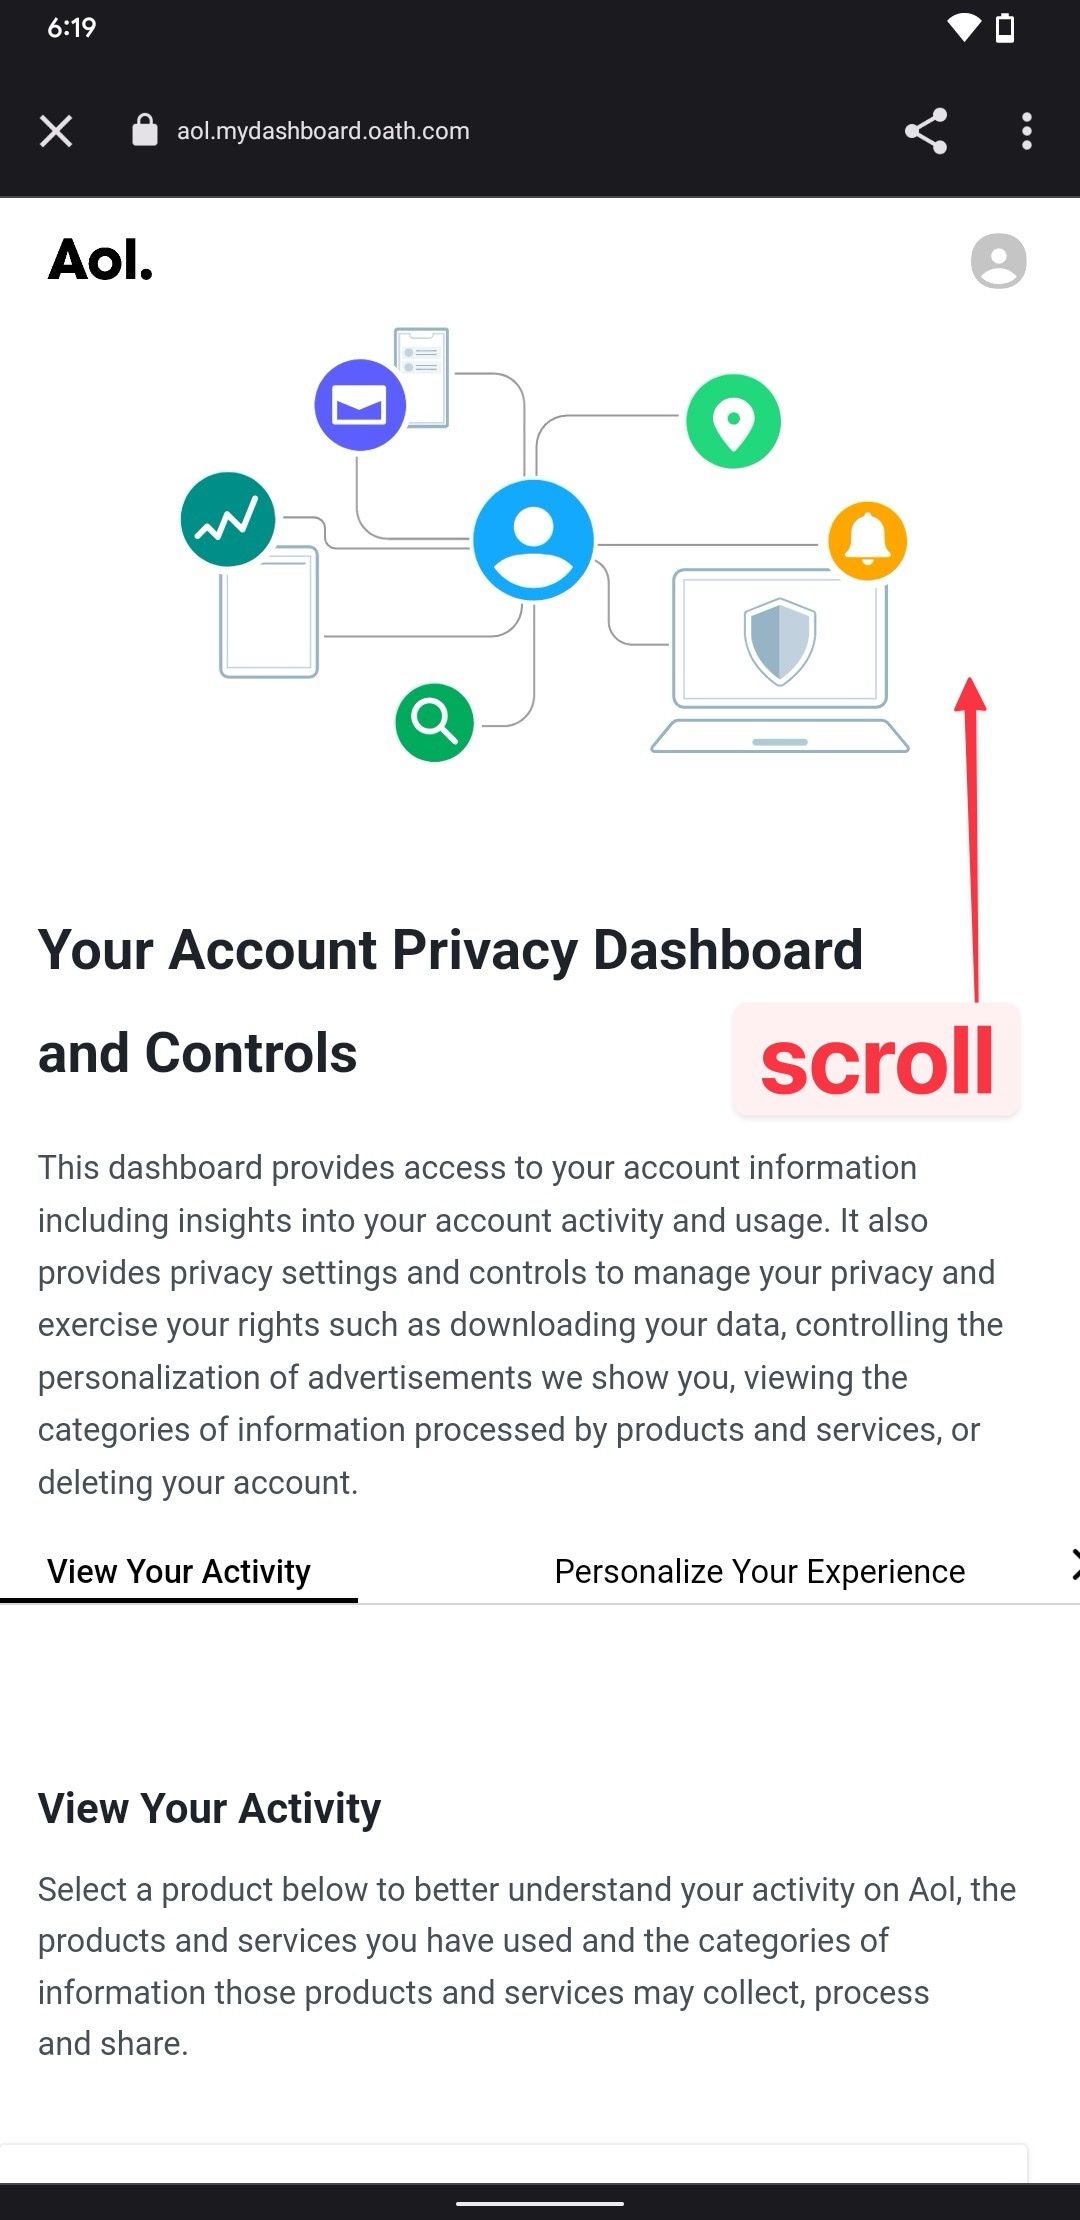 AOL mobile privacy dashboard page screenshot